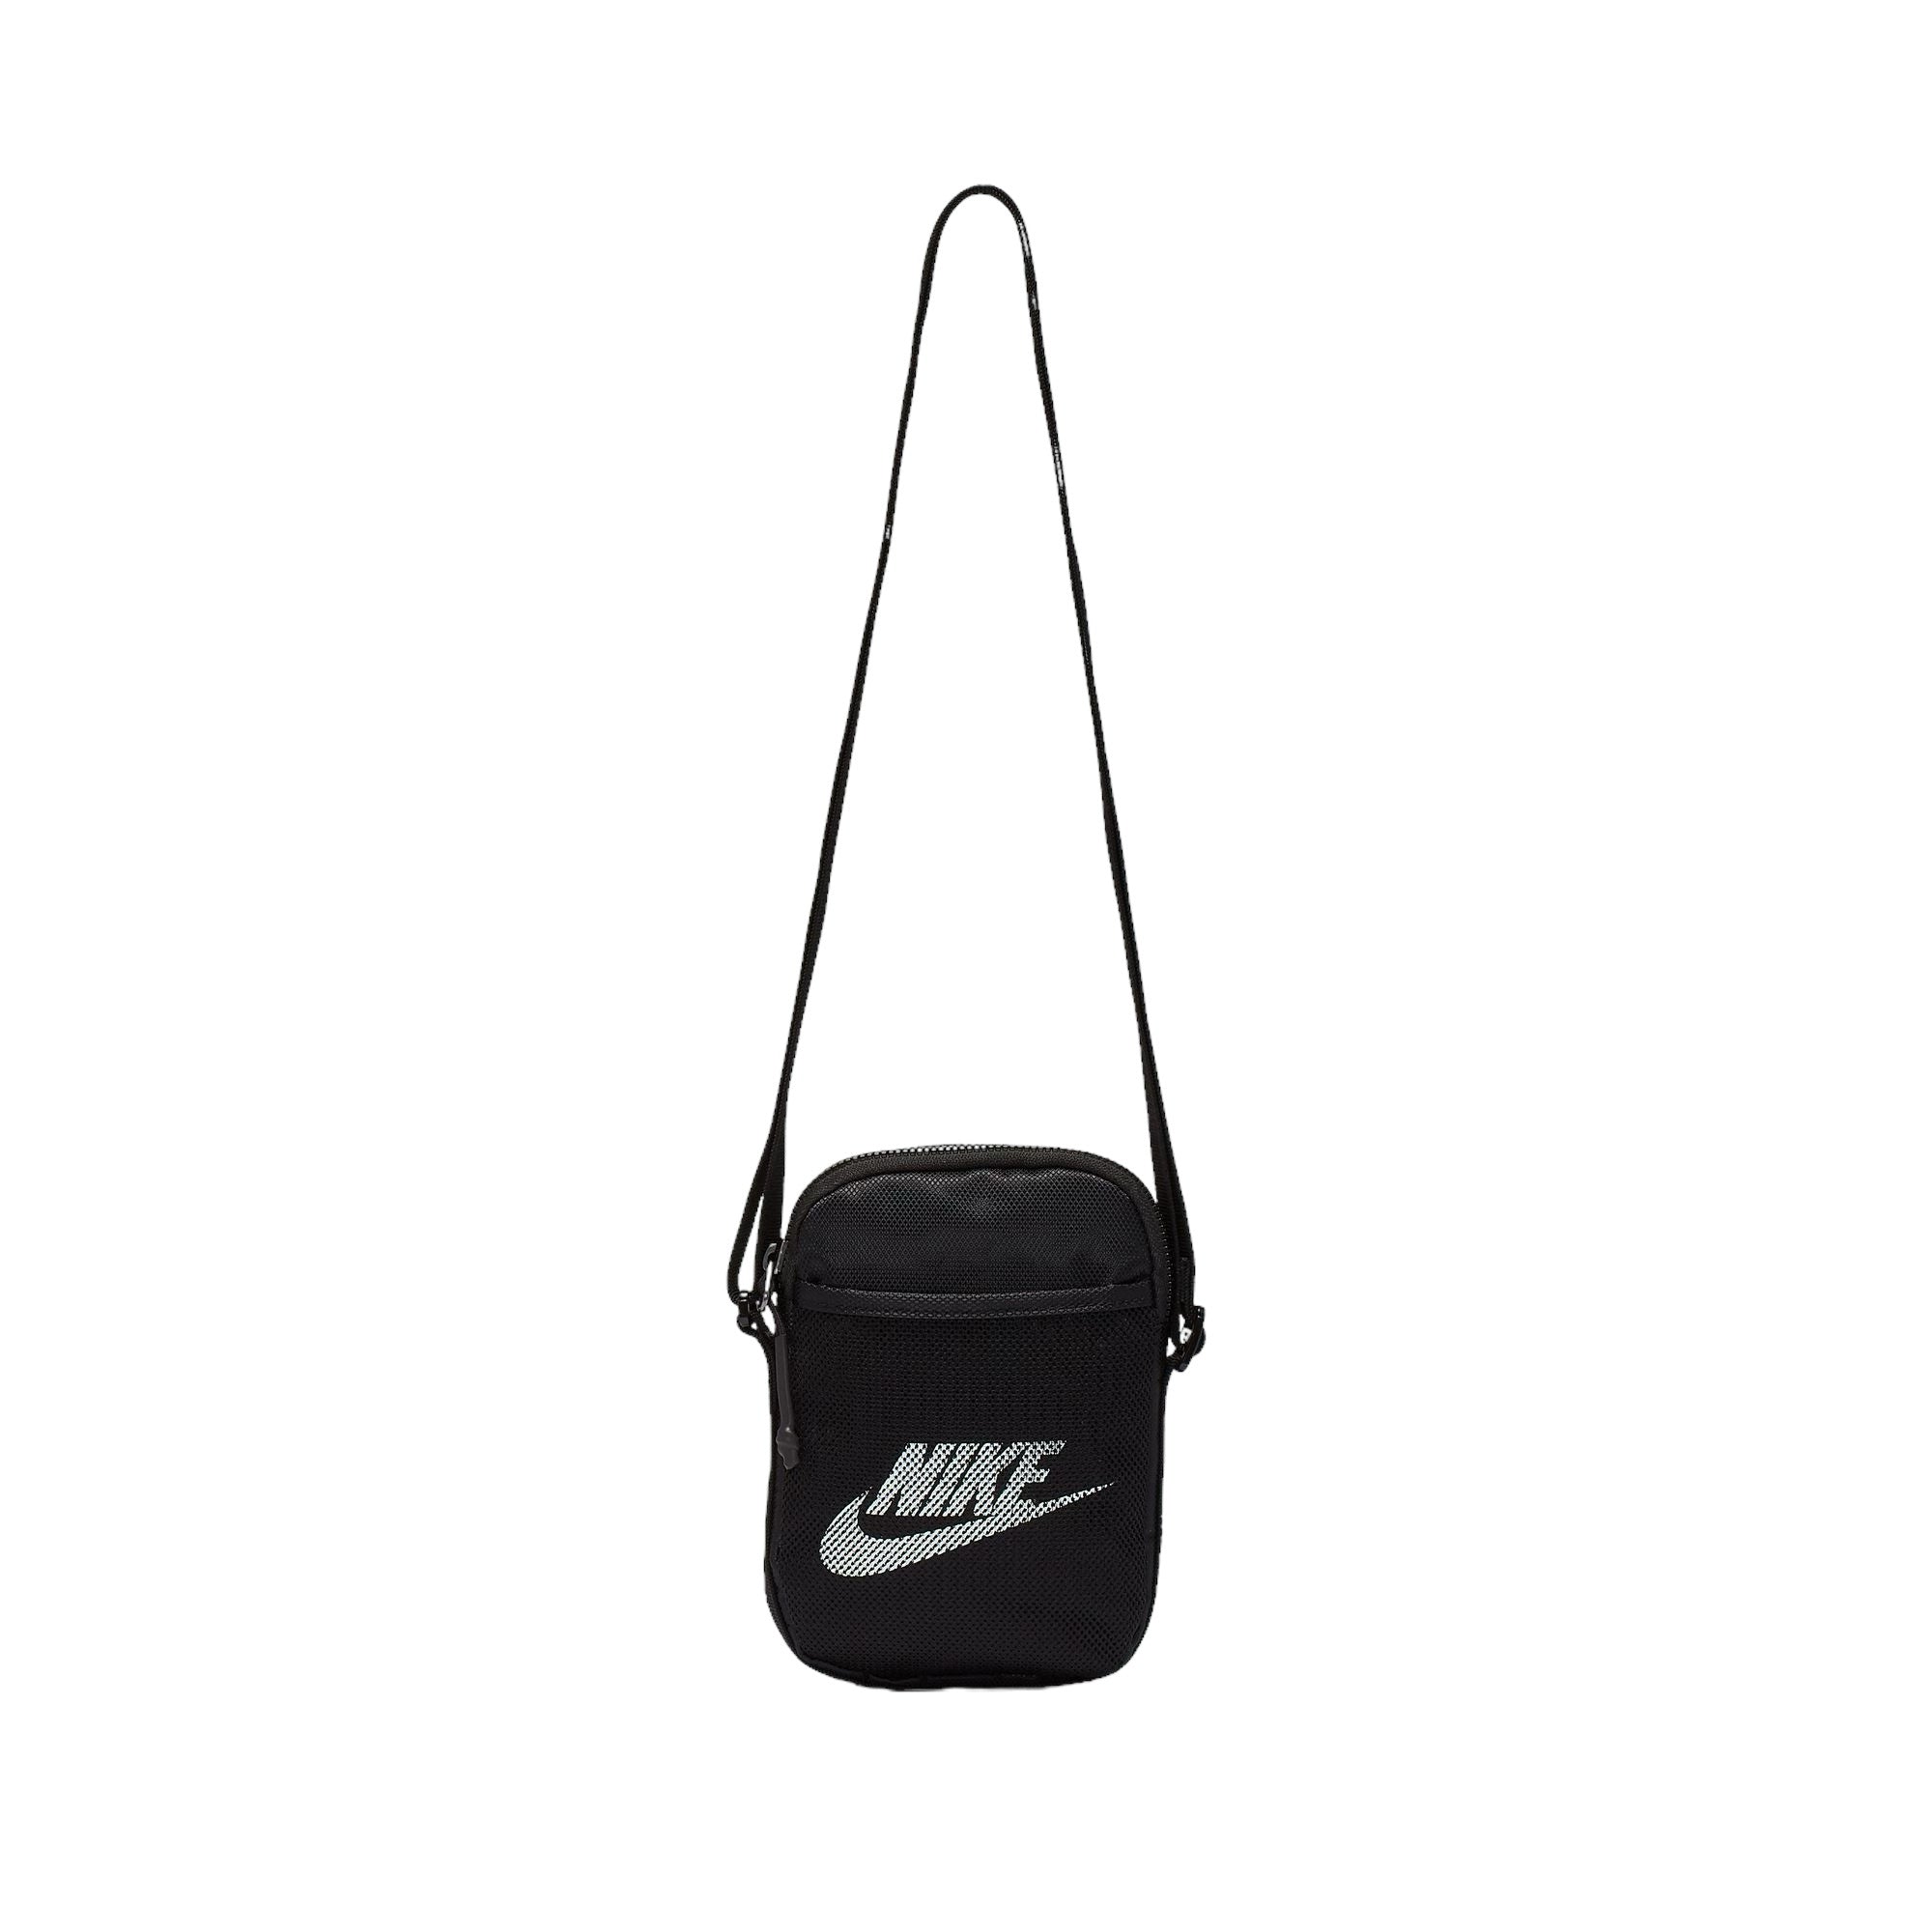 Black nike crossbody bag with mesh front pocket and white nike swoosh logo. Free uk shipping over £50